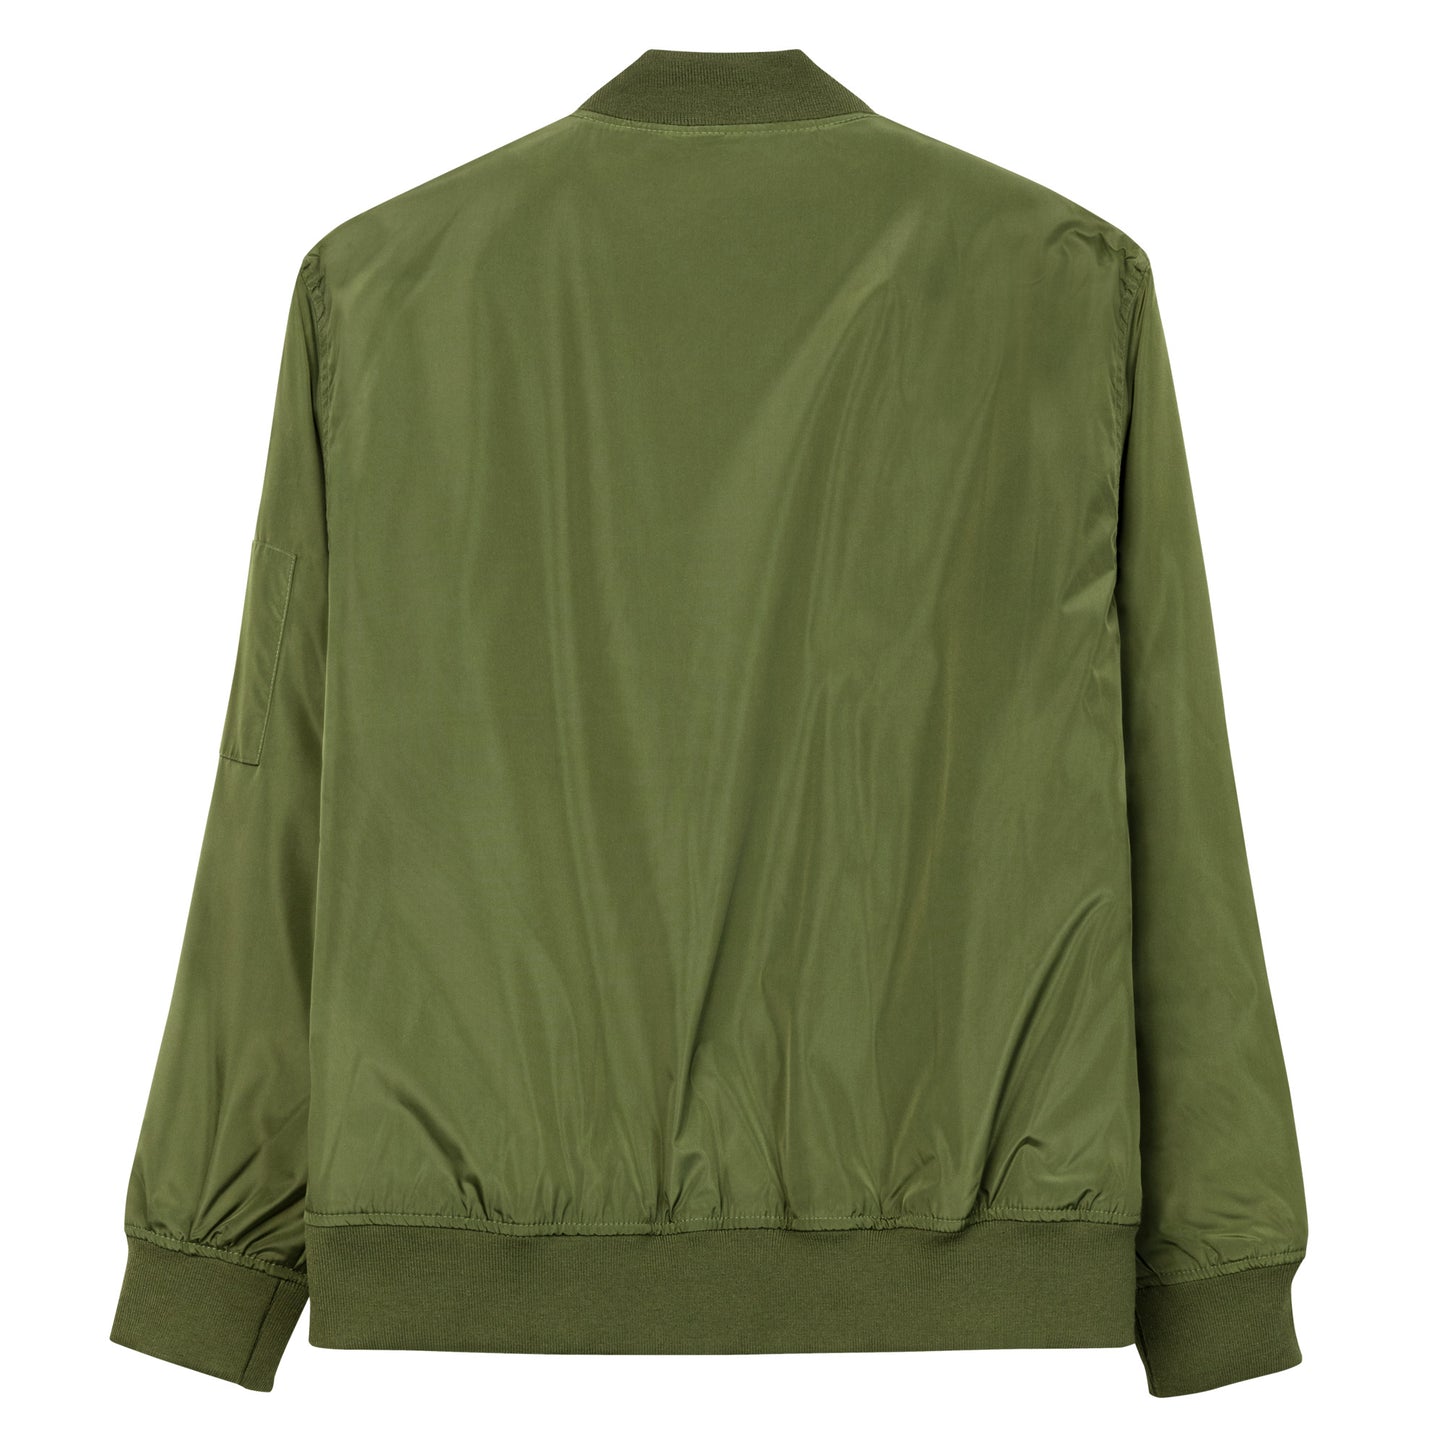 Binary State (v1) Premium recycled bomber jacket